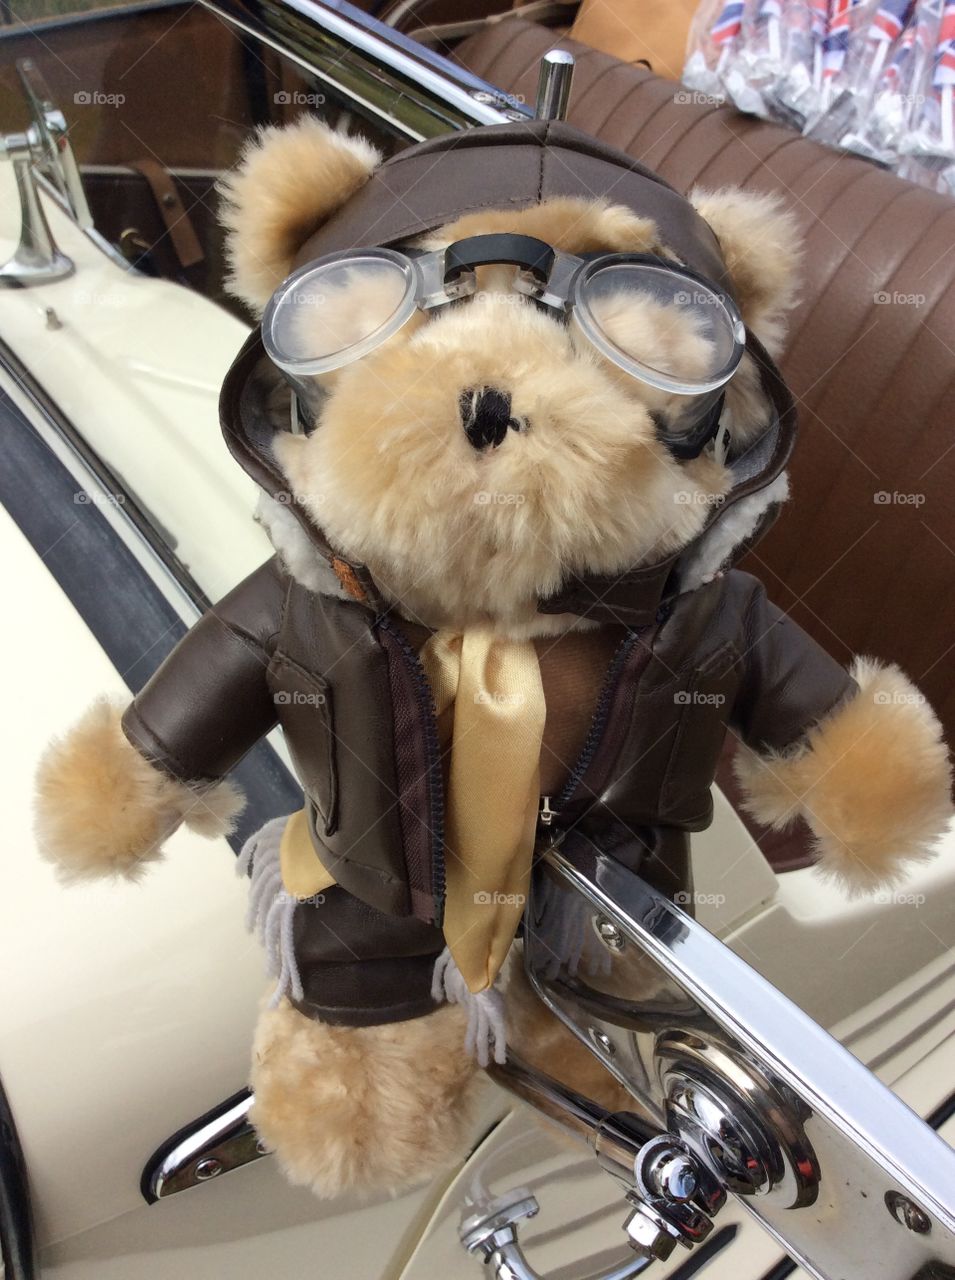 Mr. Teddy Bear